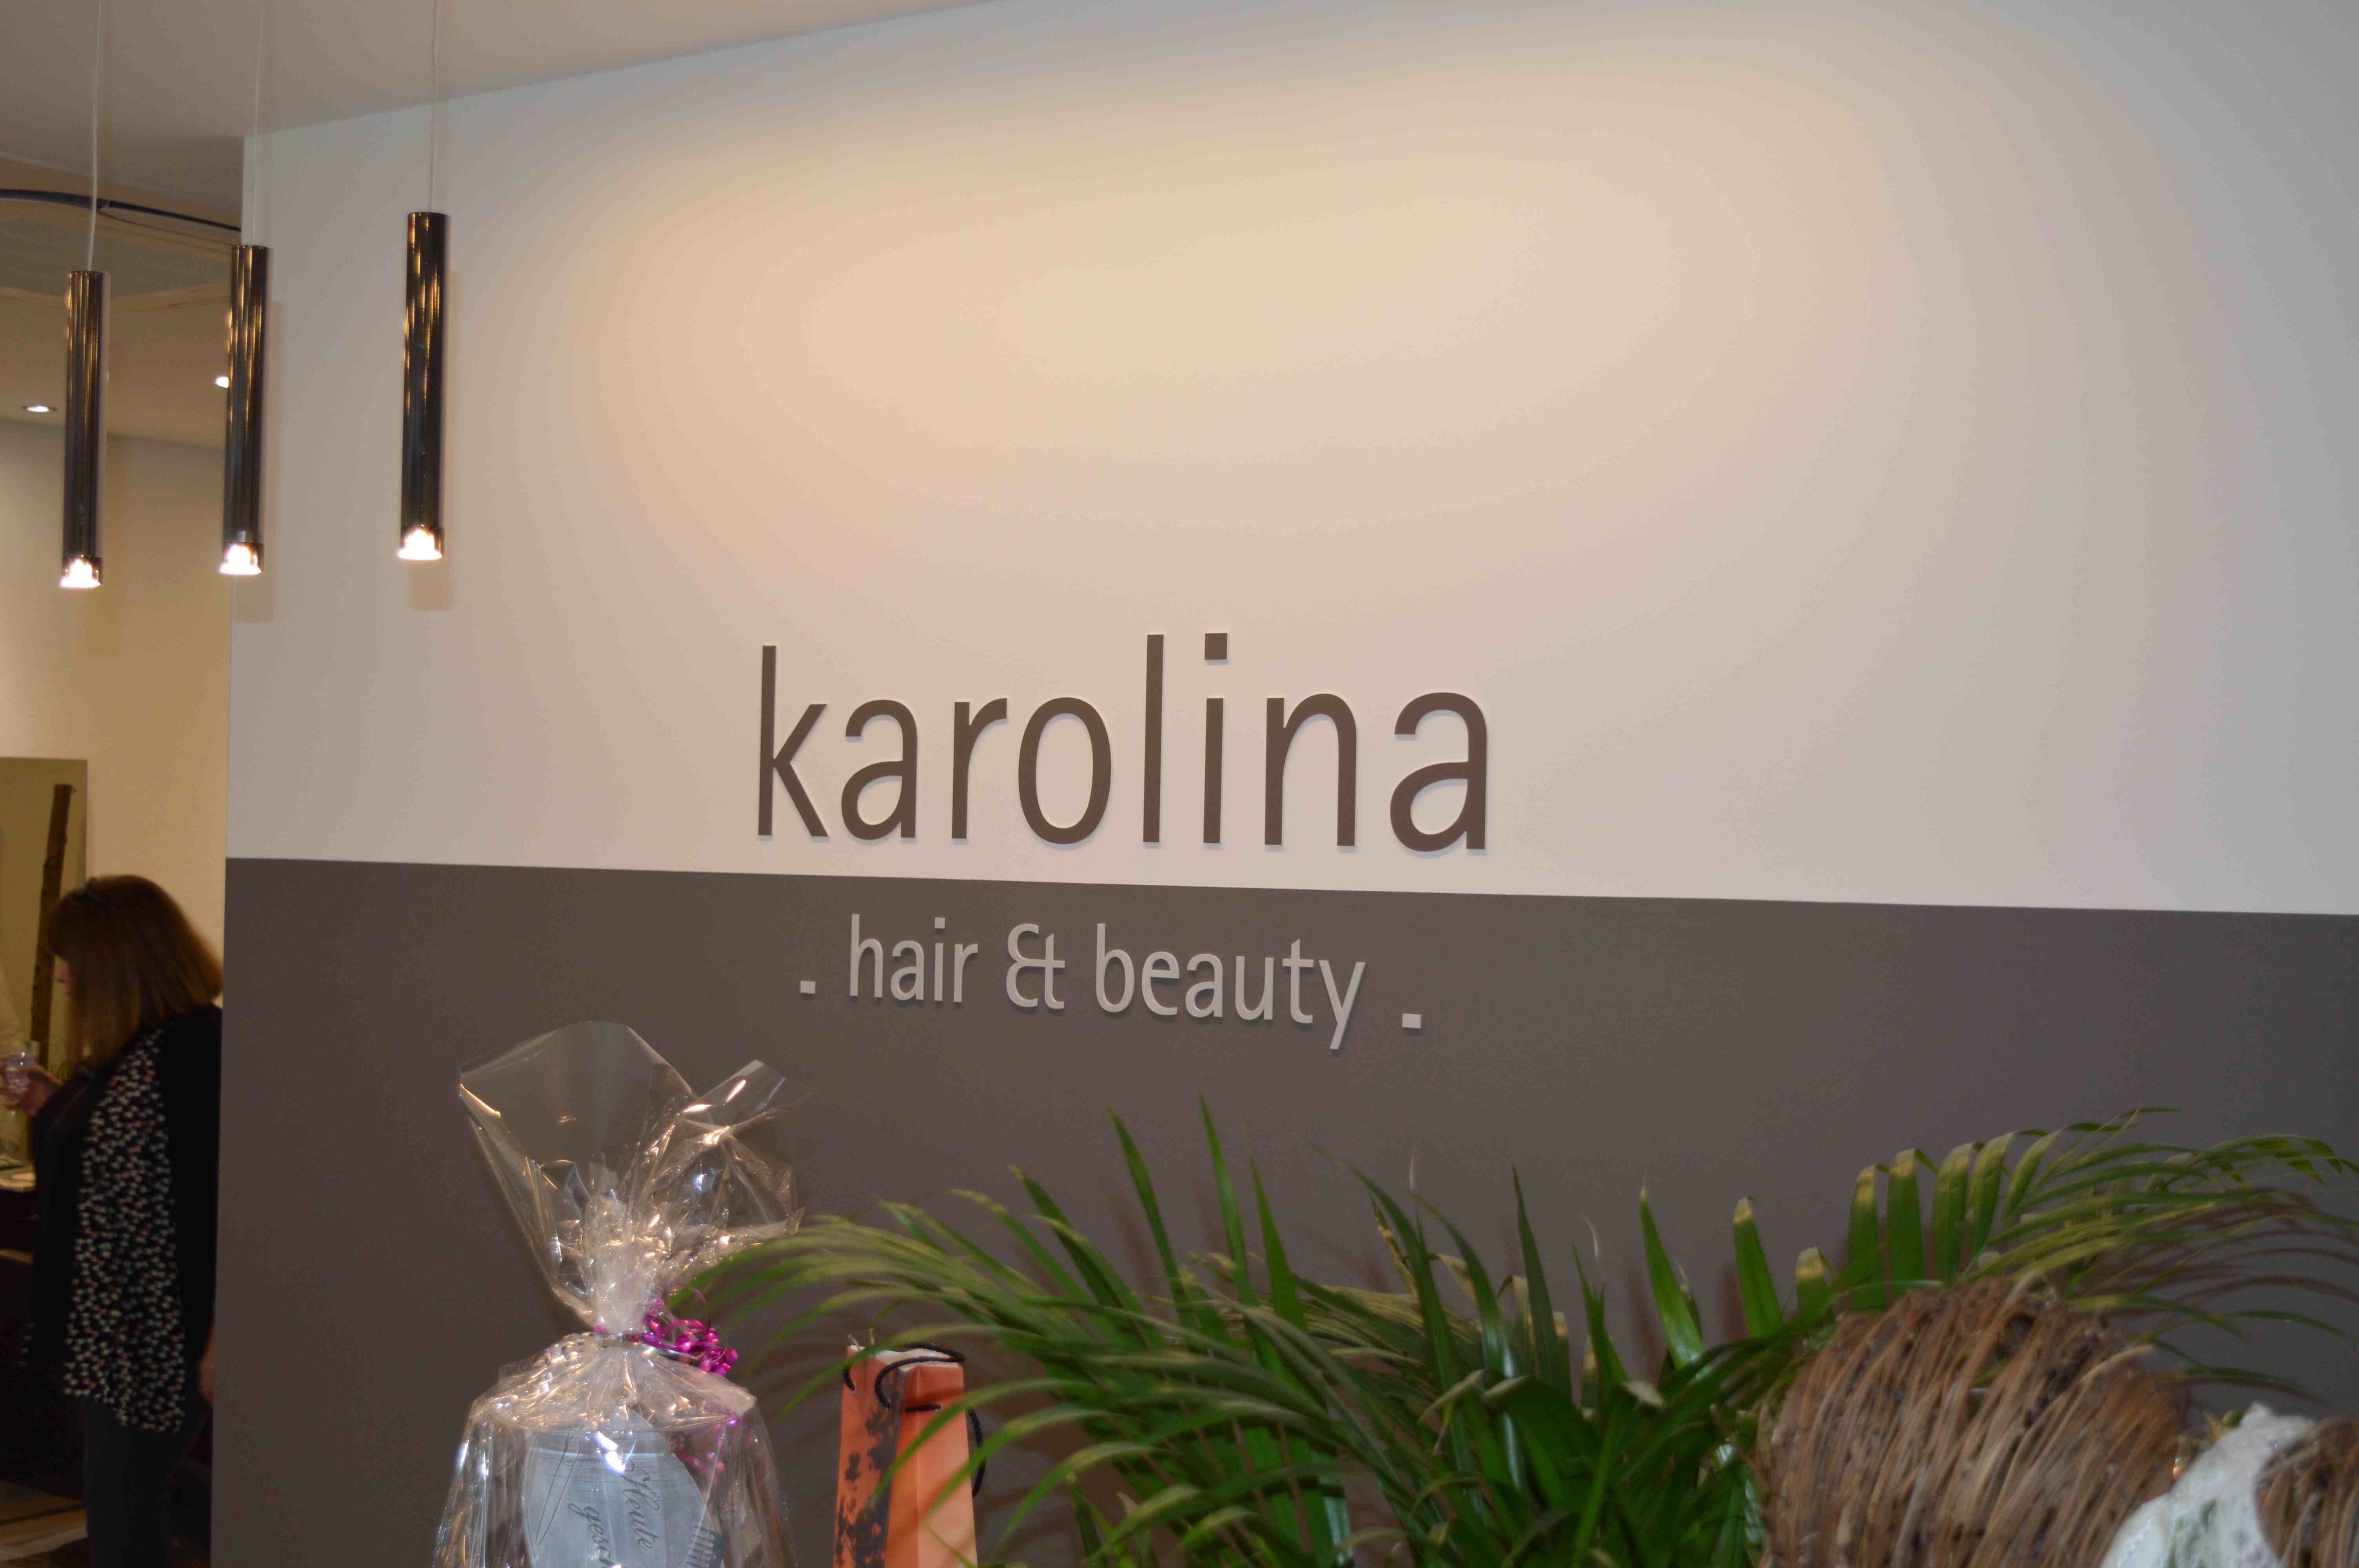 Friseur karolina hair & beauty Fellbach